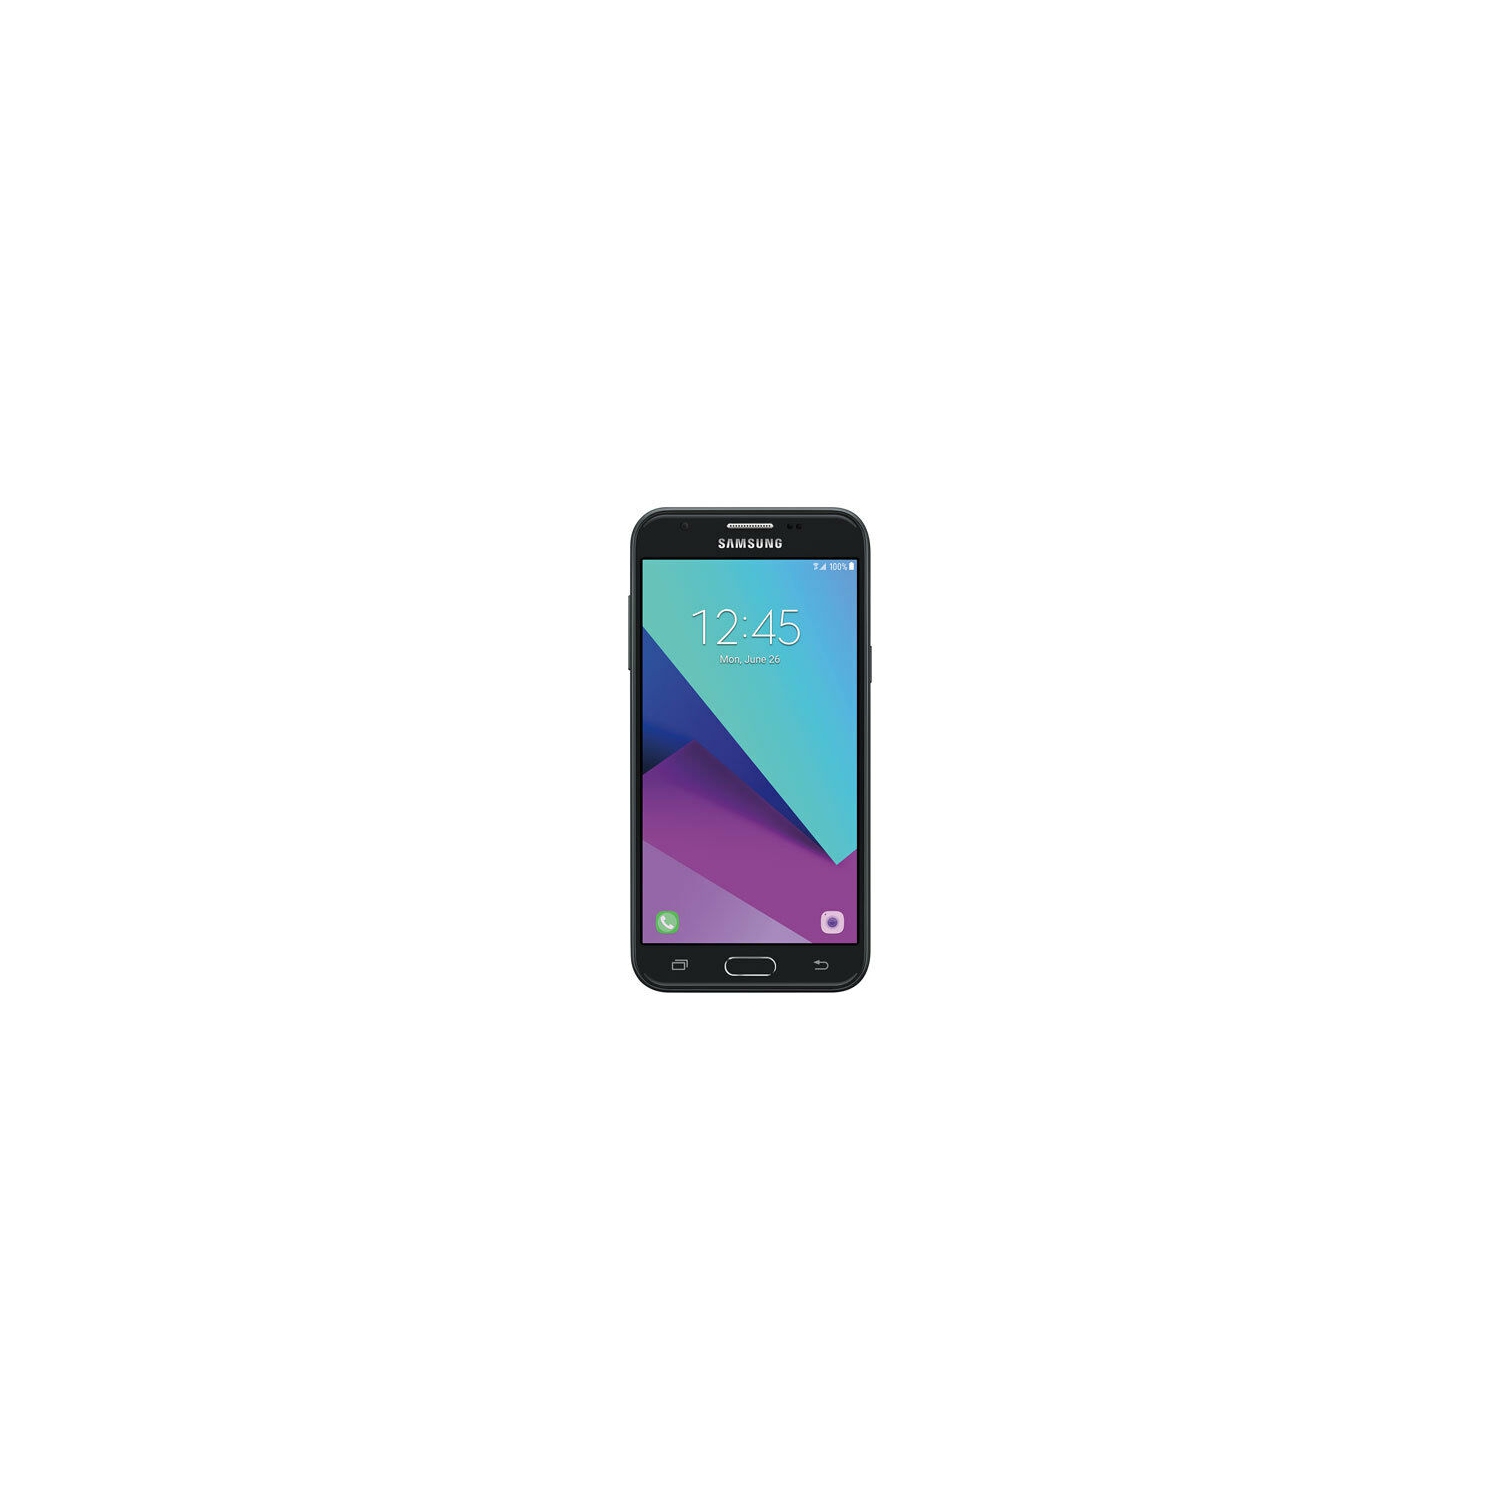 Refurbished (Excellent) - Samsung Galaxy J3 PRIME 16GB -J327W Black Unlocked Canadian Model Smartphone-Certified Refurbished